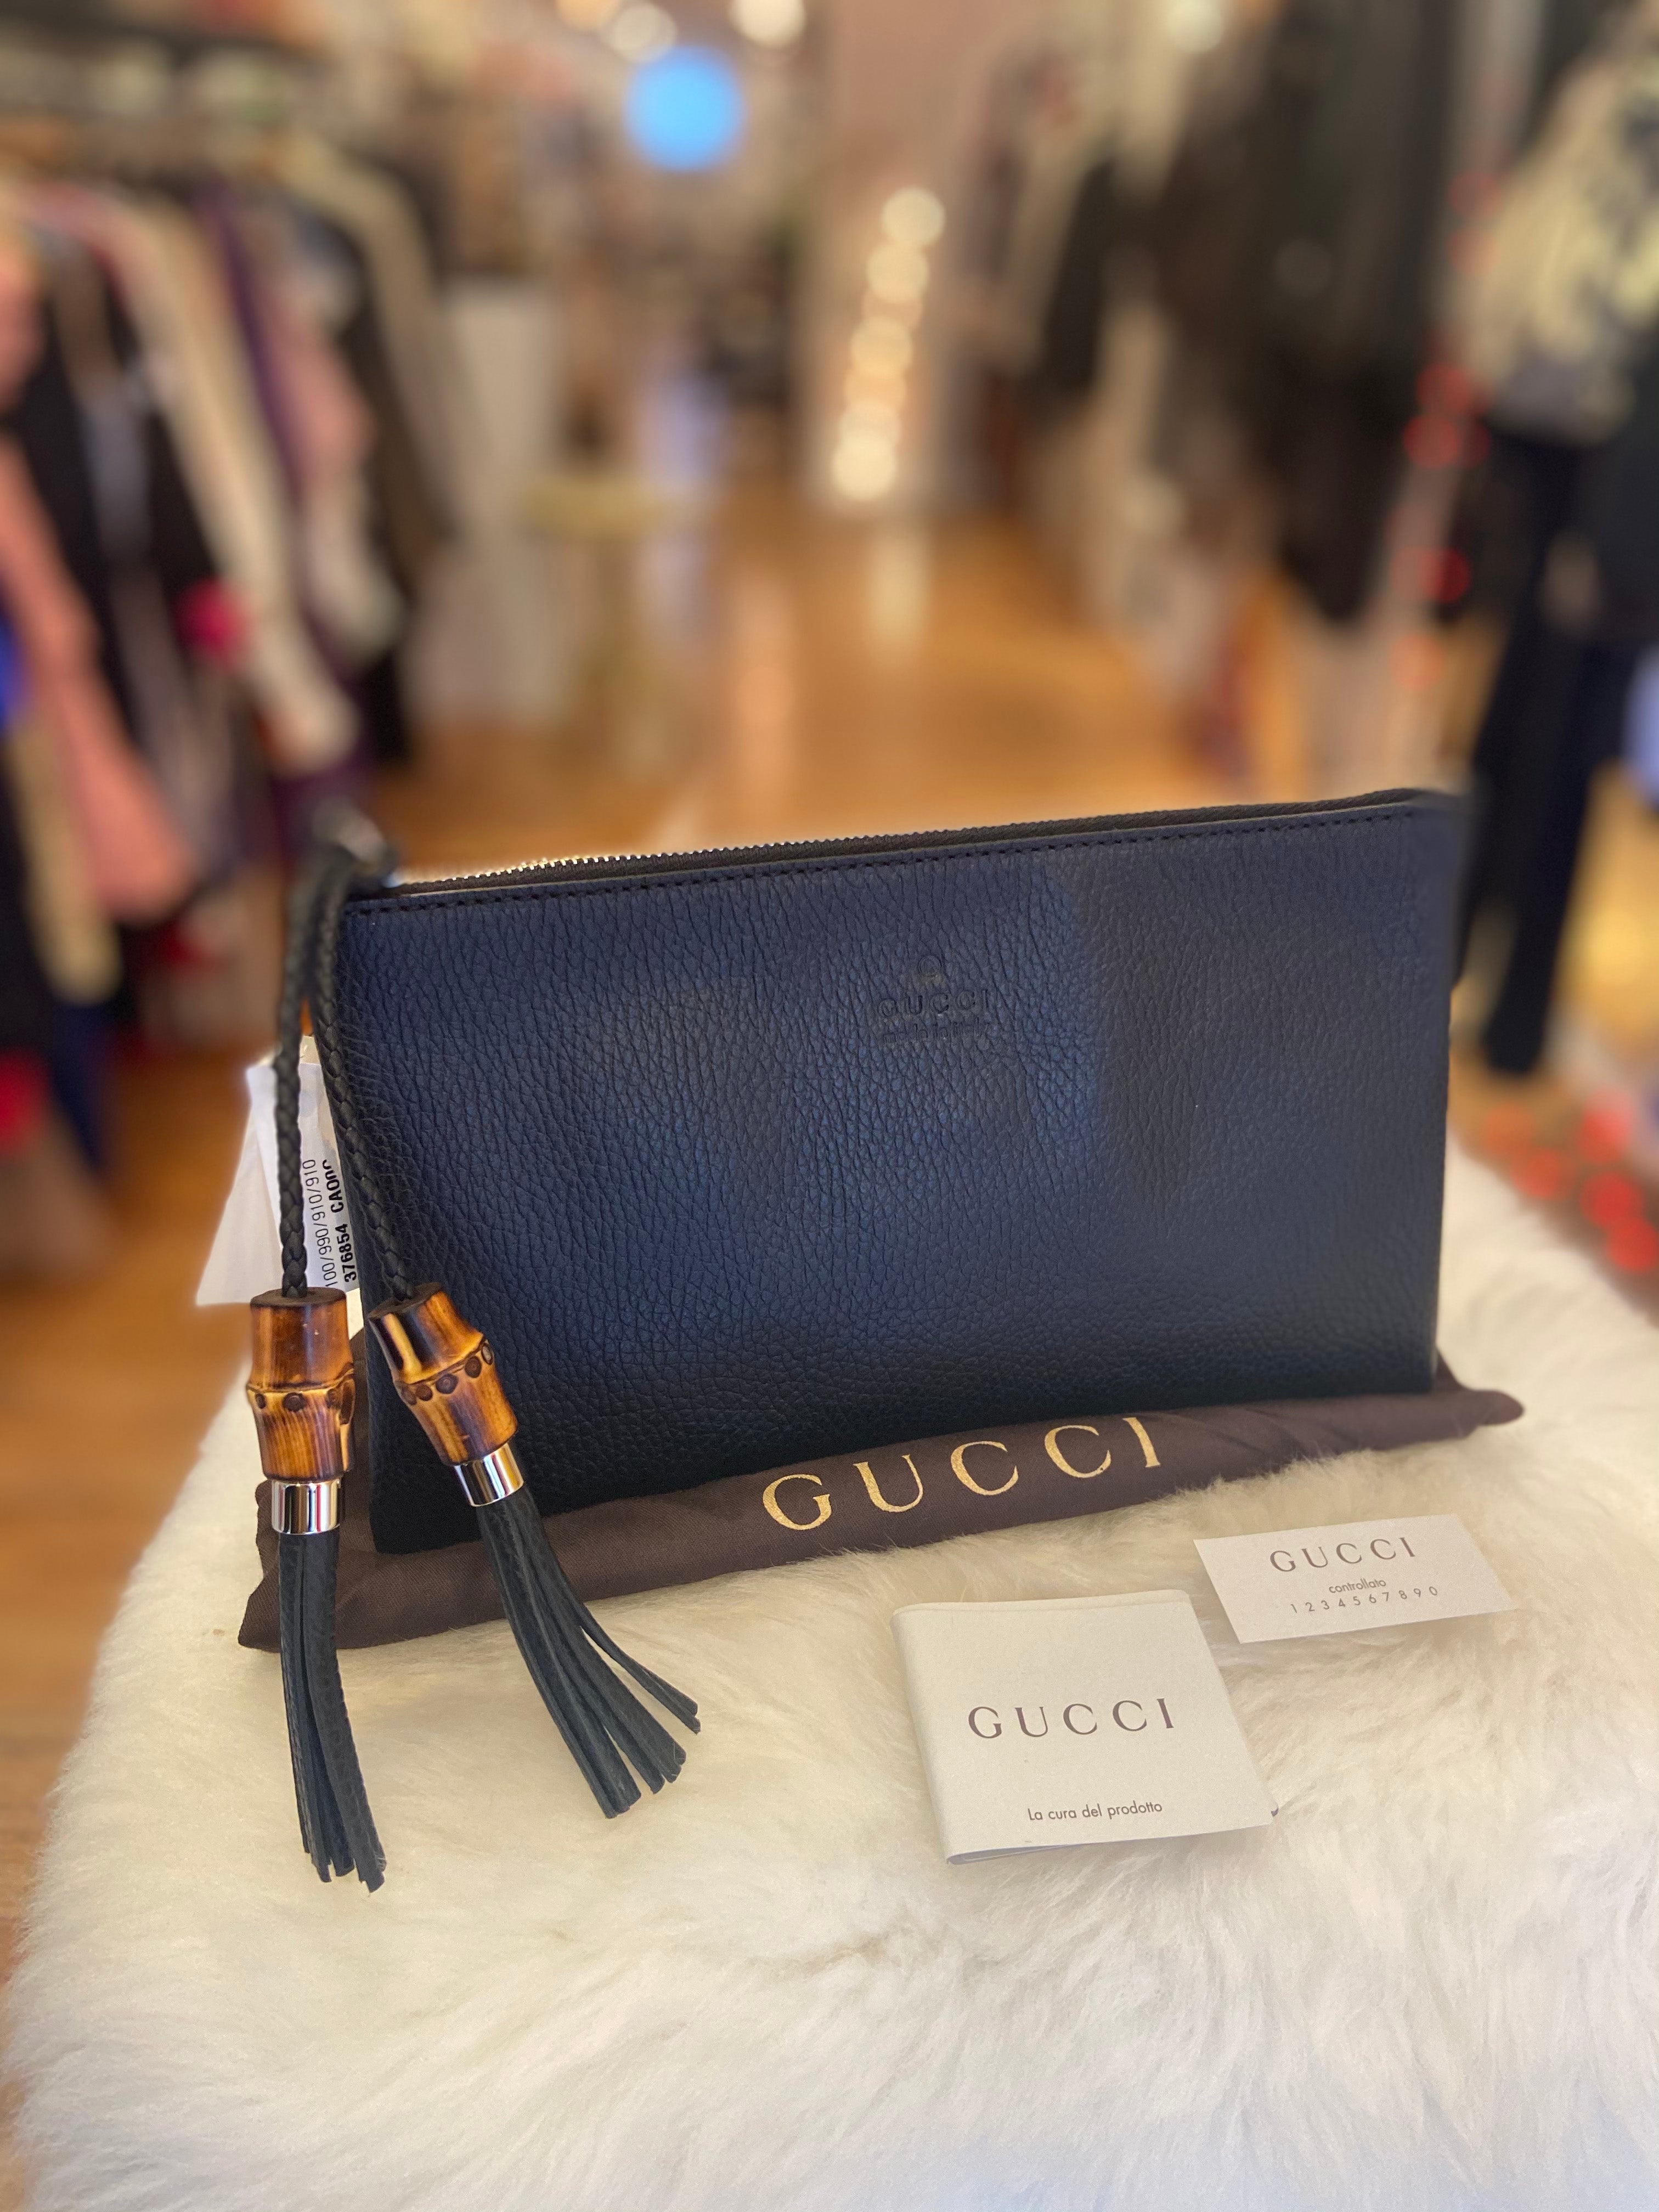 Gucci Black Leather Tassel Clutch